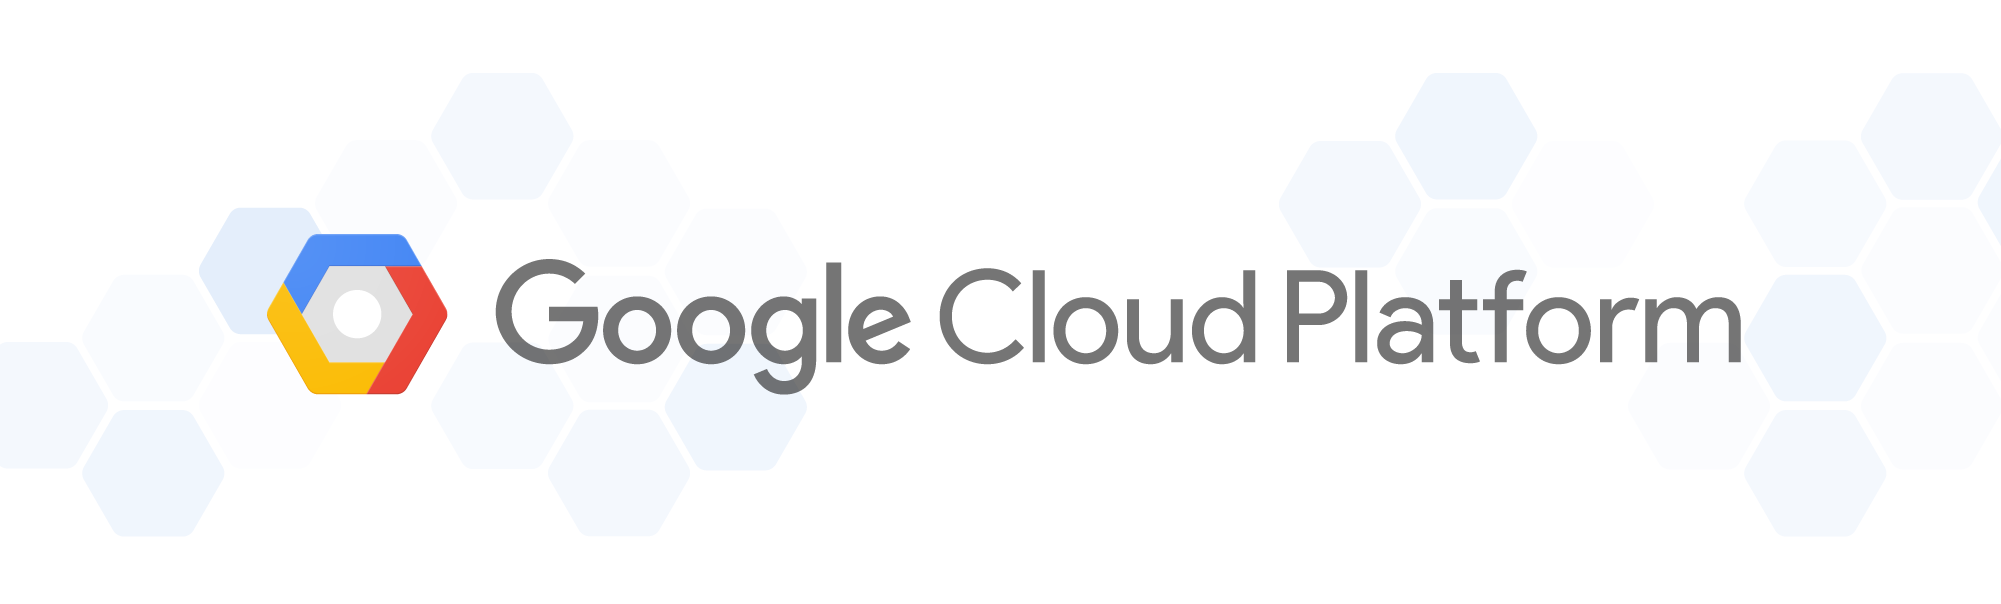 Google Cloud Logo PNG - 179509